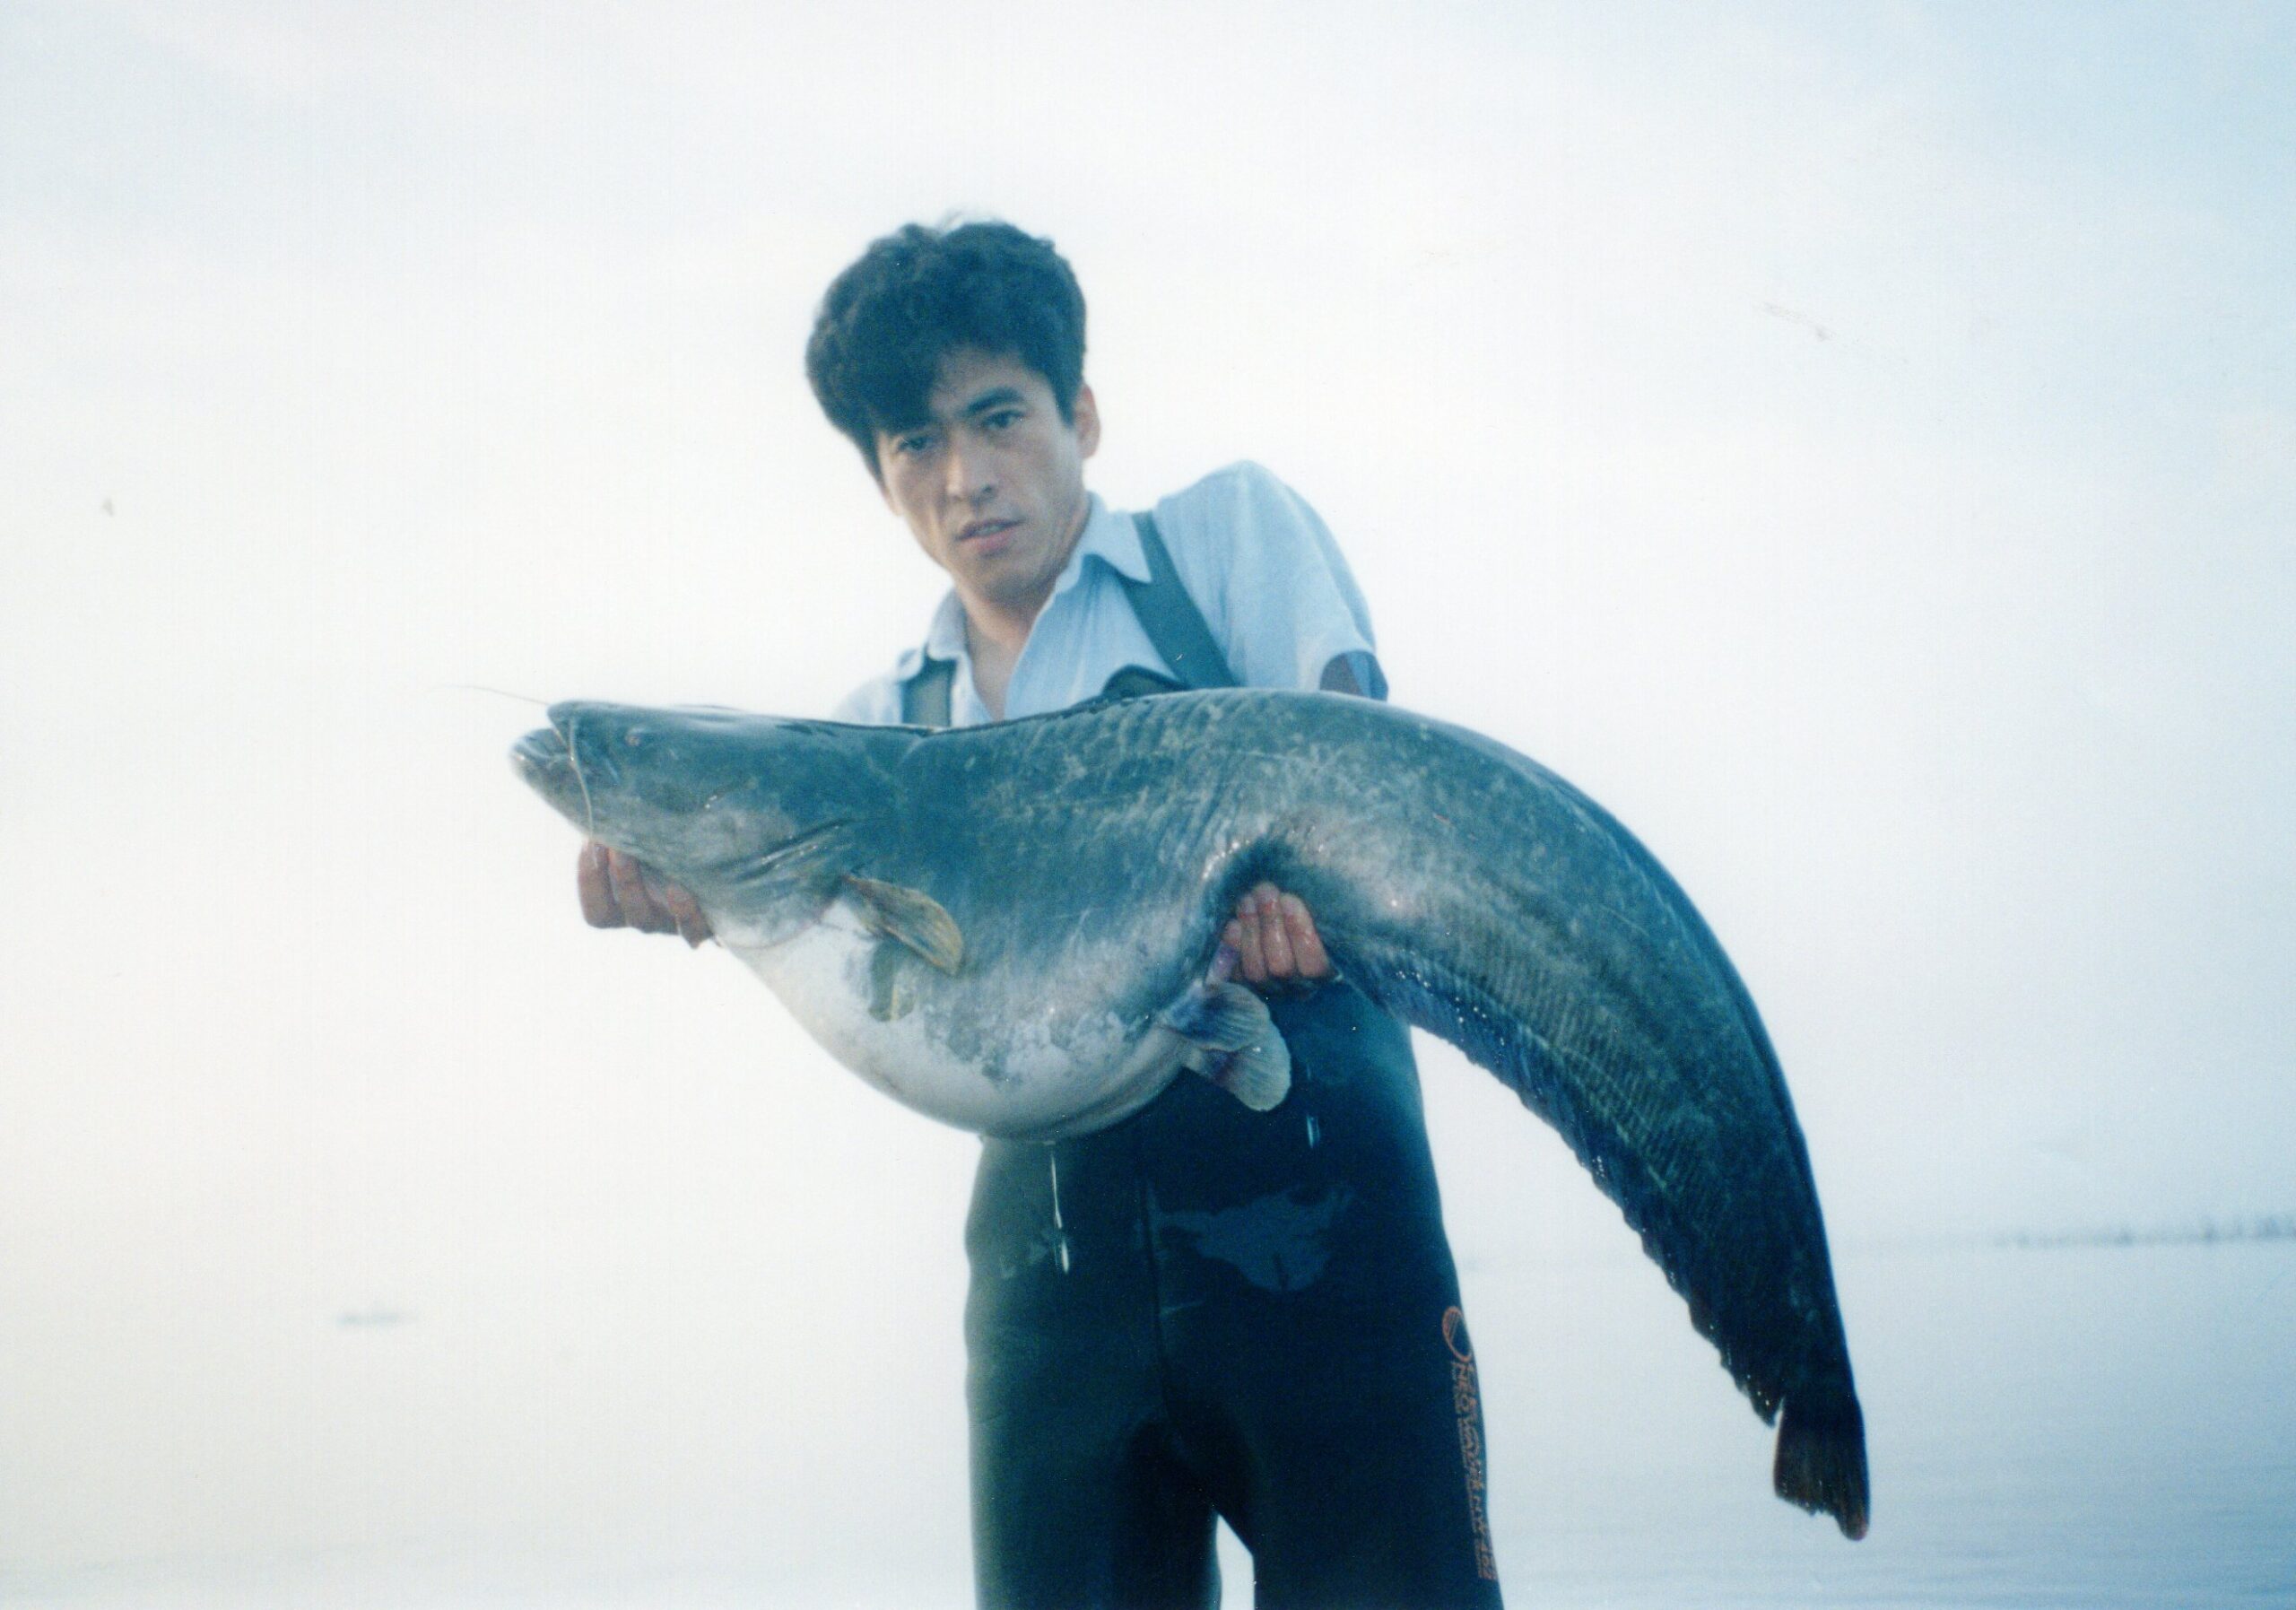 eurasian catfish all-tackle world record